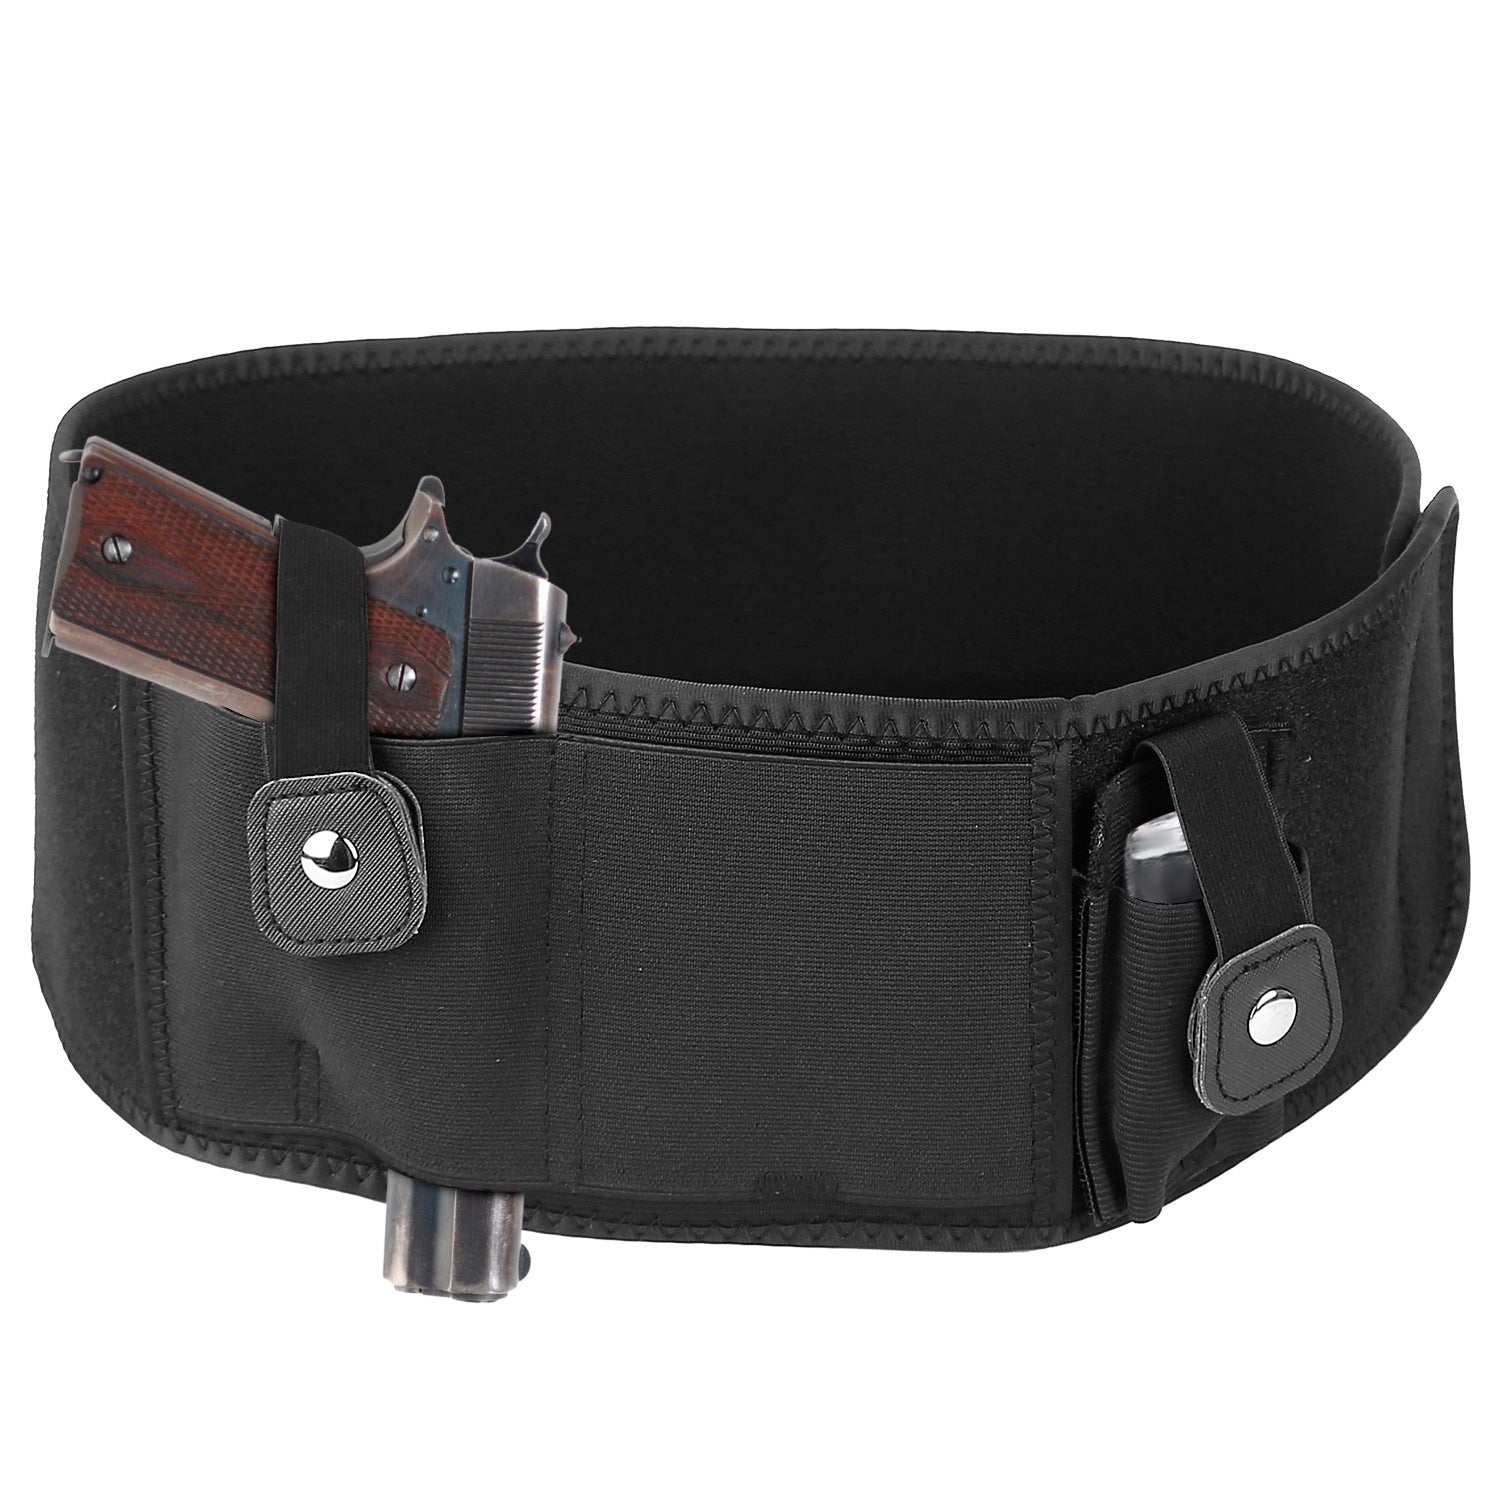 title:Belly Band Gun Holster Adjustable Waist Carry Tactical Pistol Pouch Breathable Neoprene Gun Belt Bag;color:Black